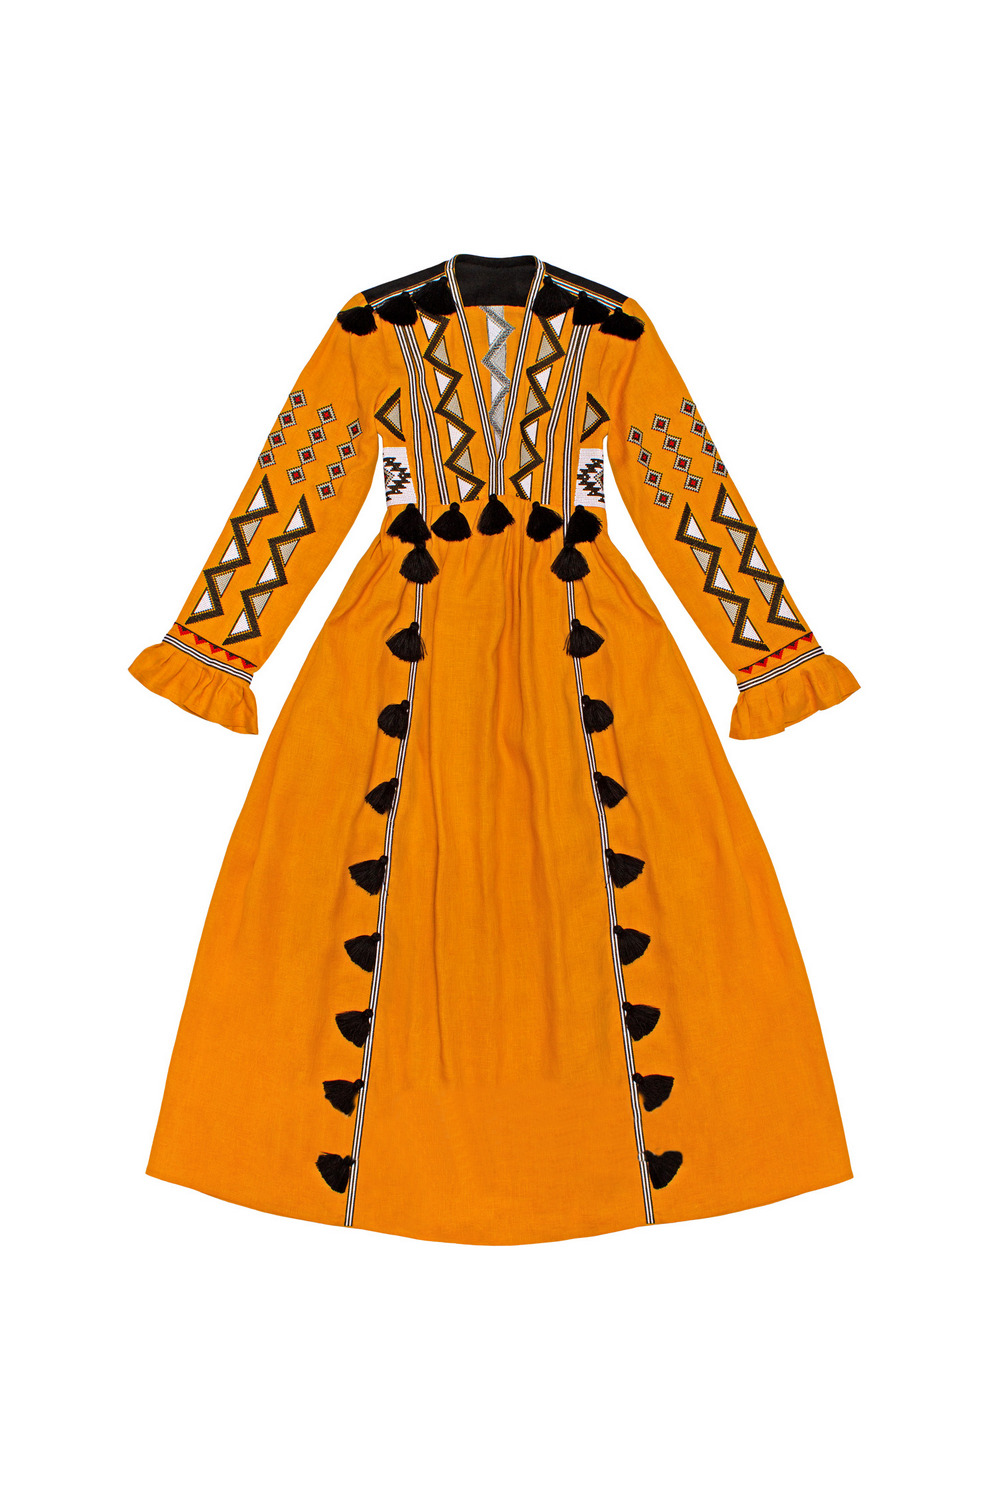 Buy Unique Folk Festival Linen long Yellow Ukrainian Vyshyvanka dress, Boho Hippie Comfortable embroidered dress